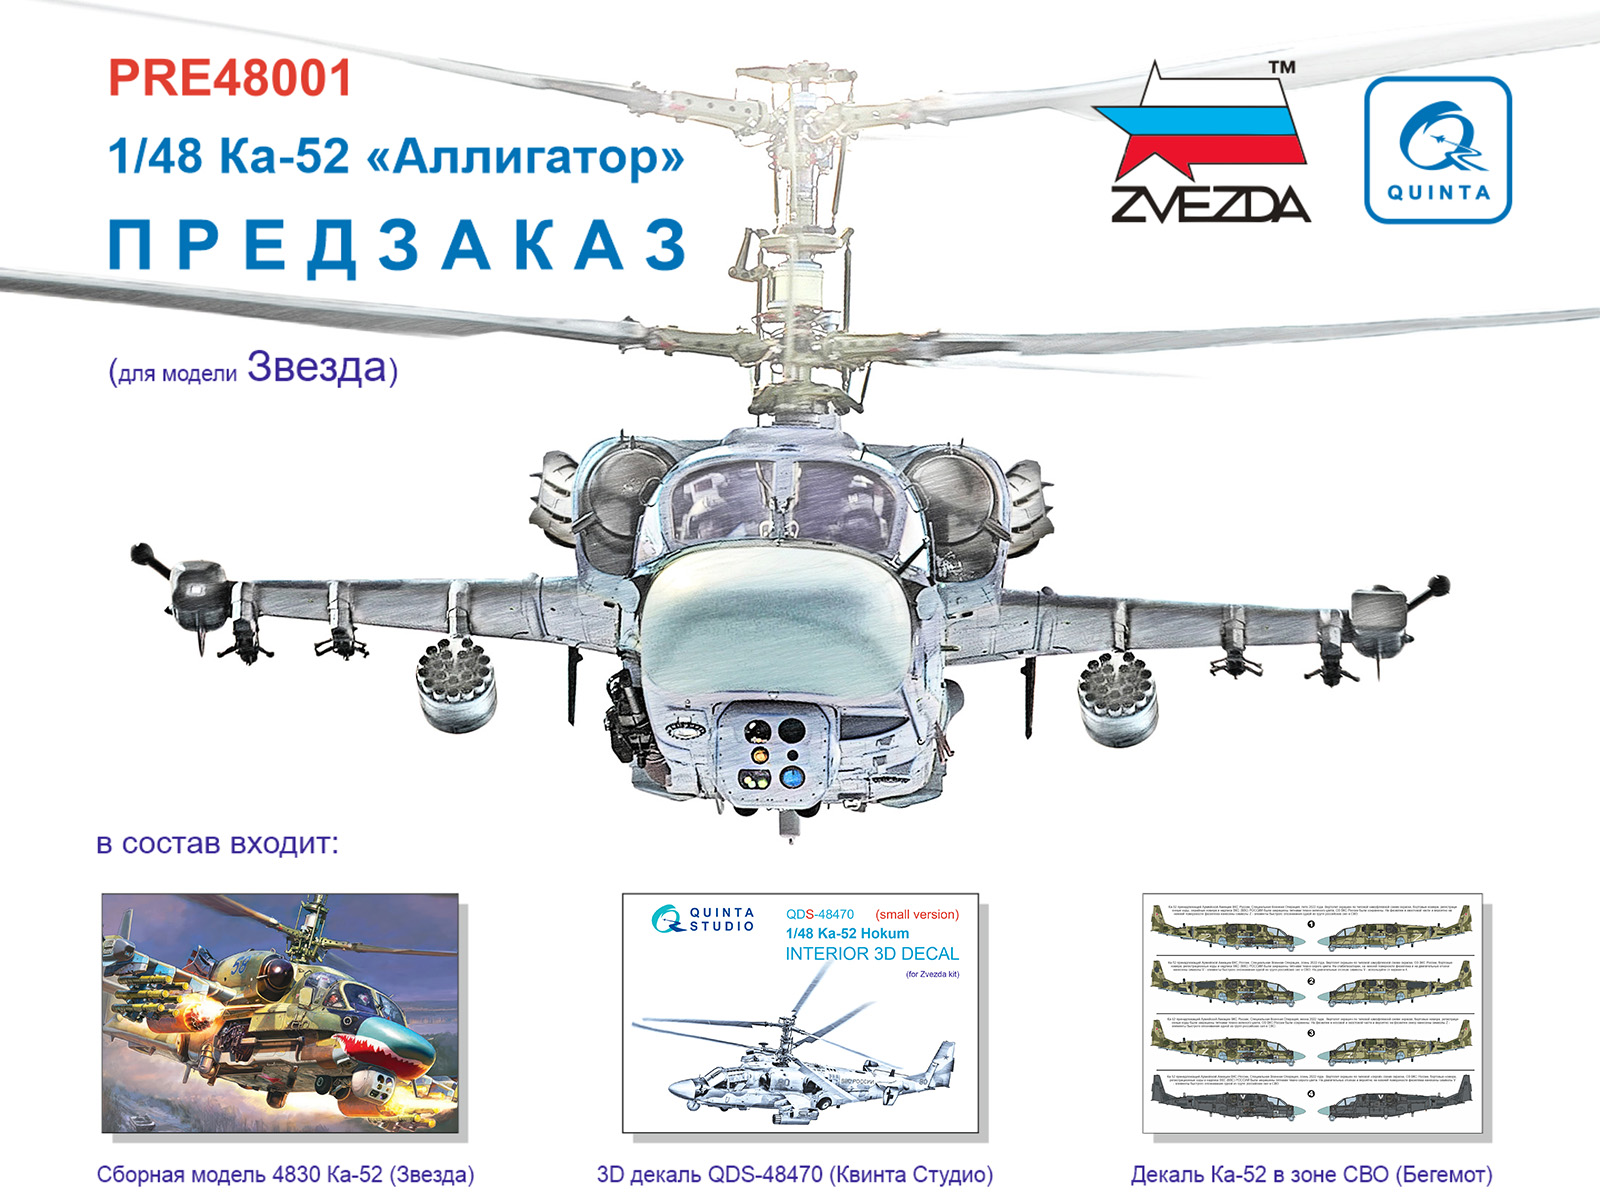 Model kit 1/48 Pre-order: Ka-52 "Zvezda" kit with bonuses: 3D Decal Quinta Studio QDS-48470 + Decal Begemot (for the Russian-Ukrainian conflict)